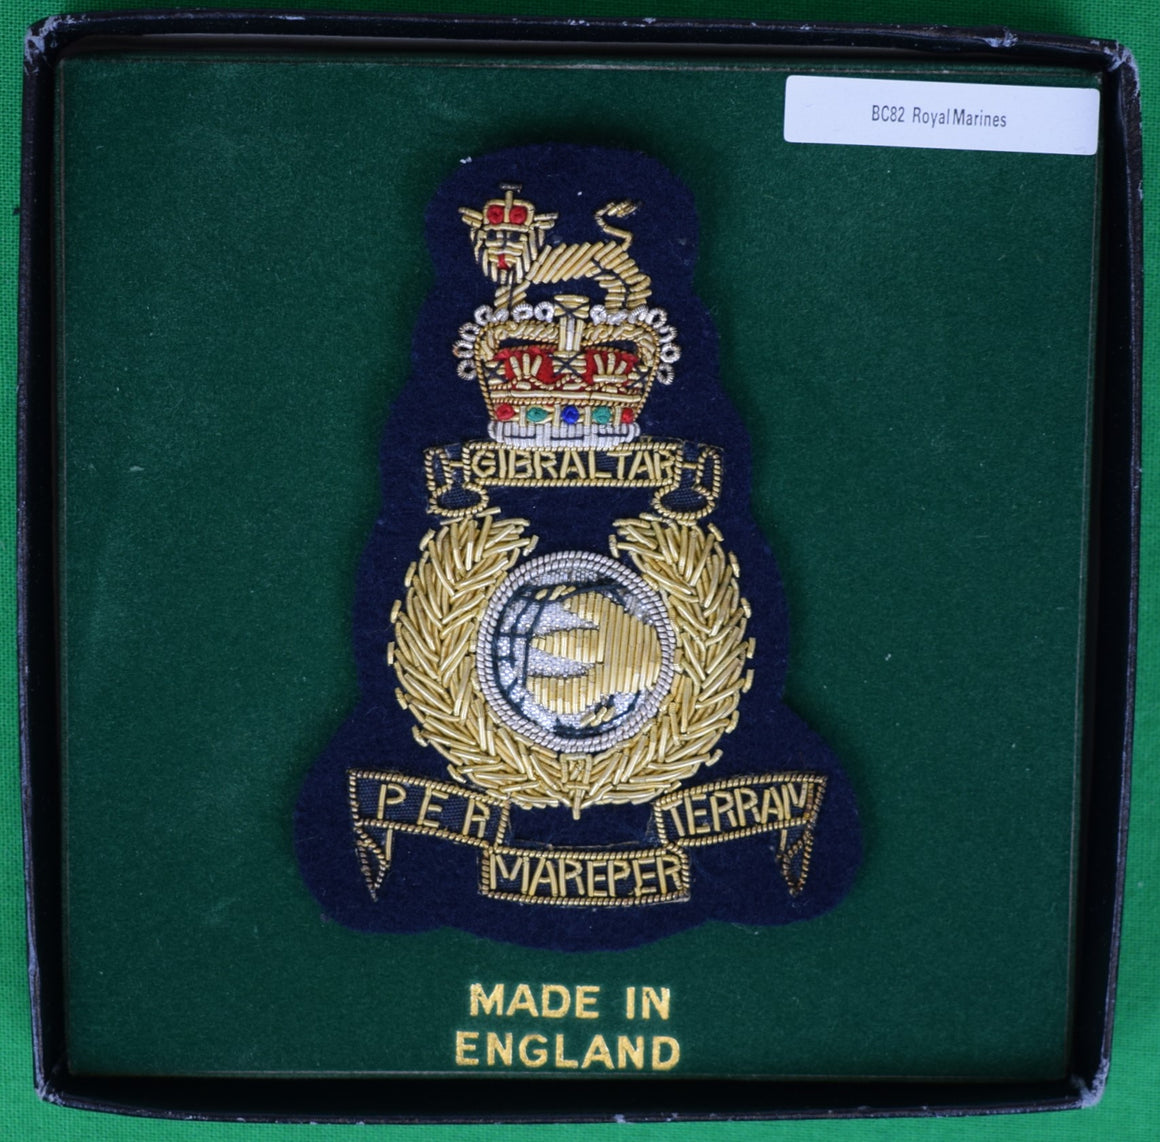 "Gibraltar Royal Marines Per Mar Eper Terram Blazer Badge" (New in Box)